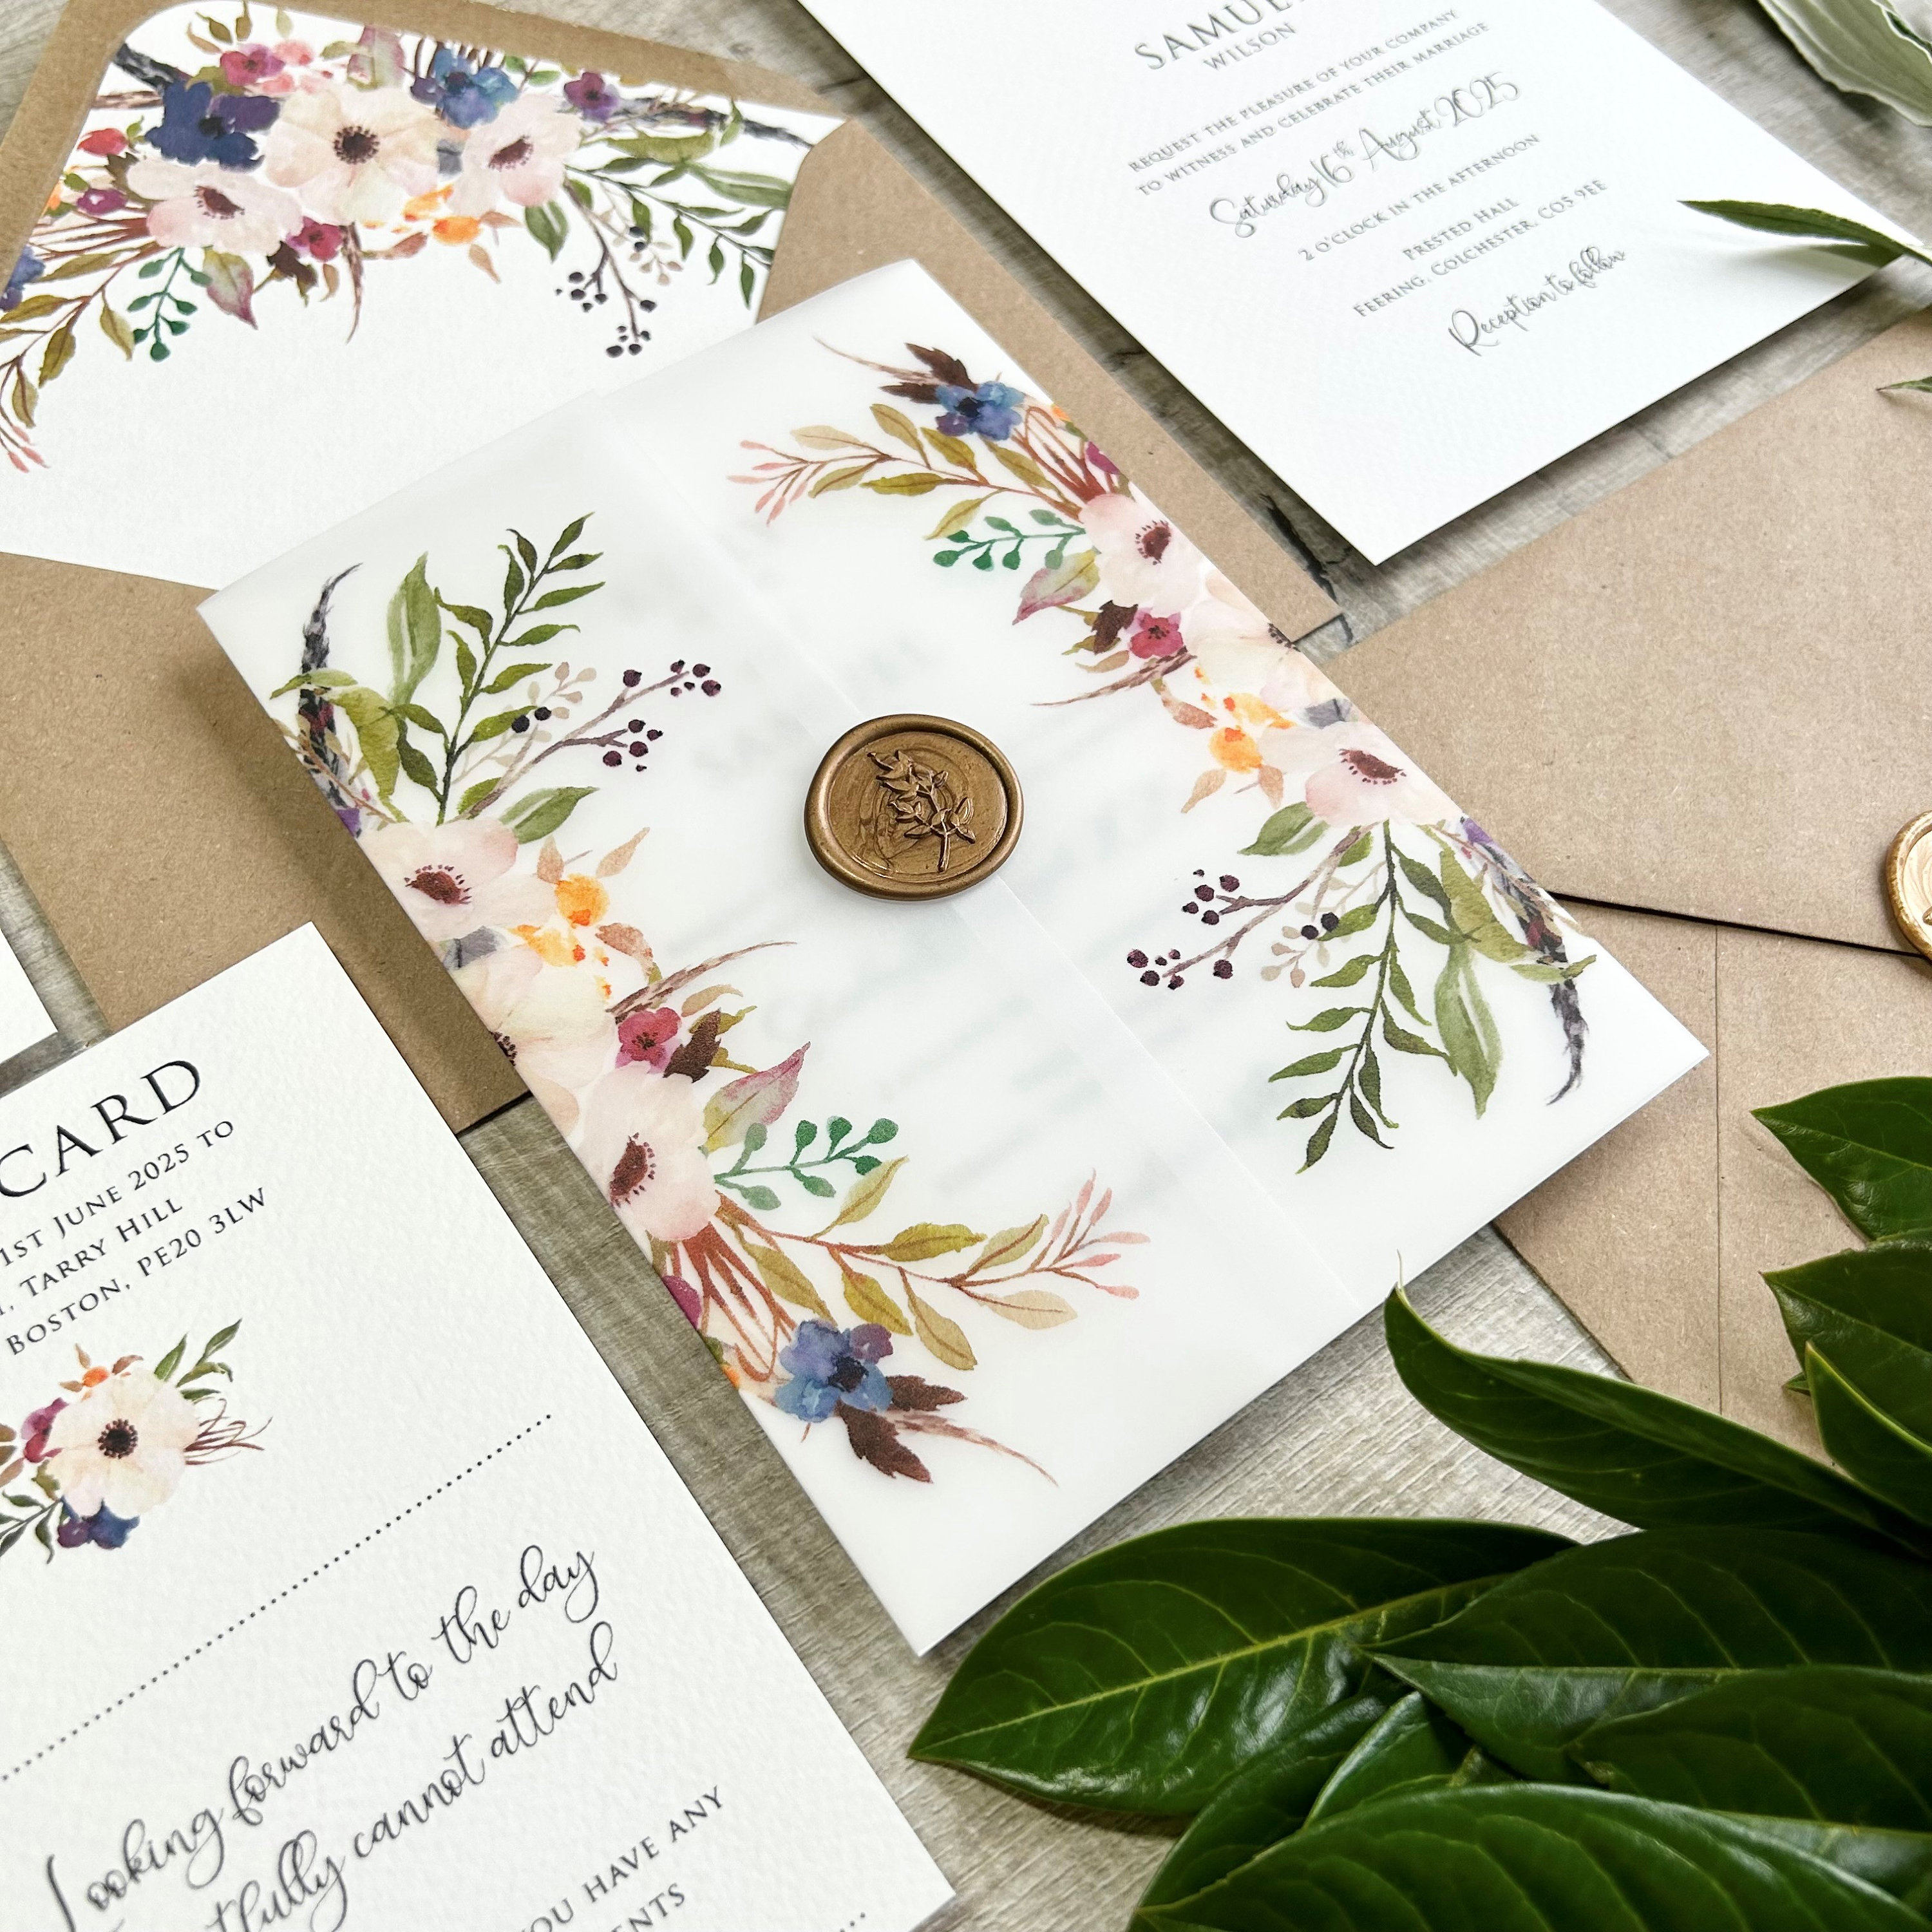 5 Best Vellum Wedding Invitation Design Ideas